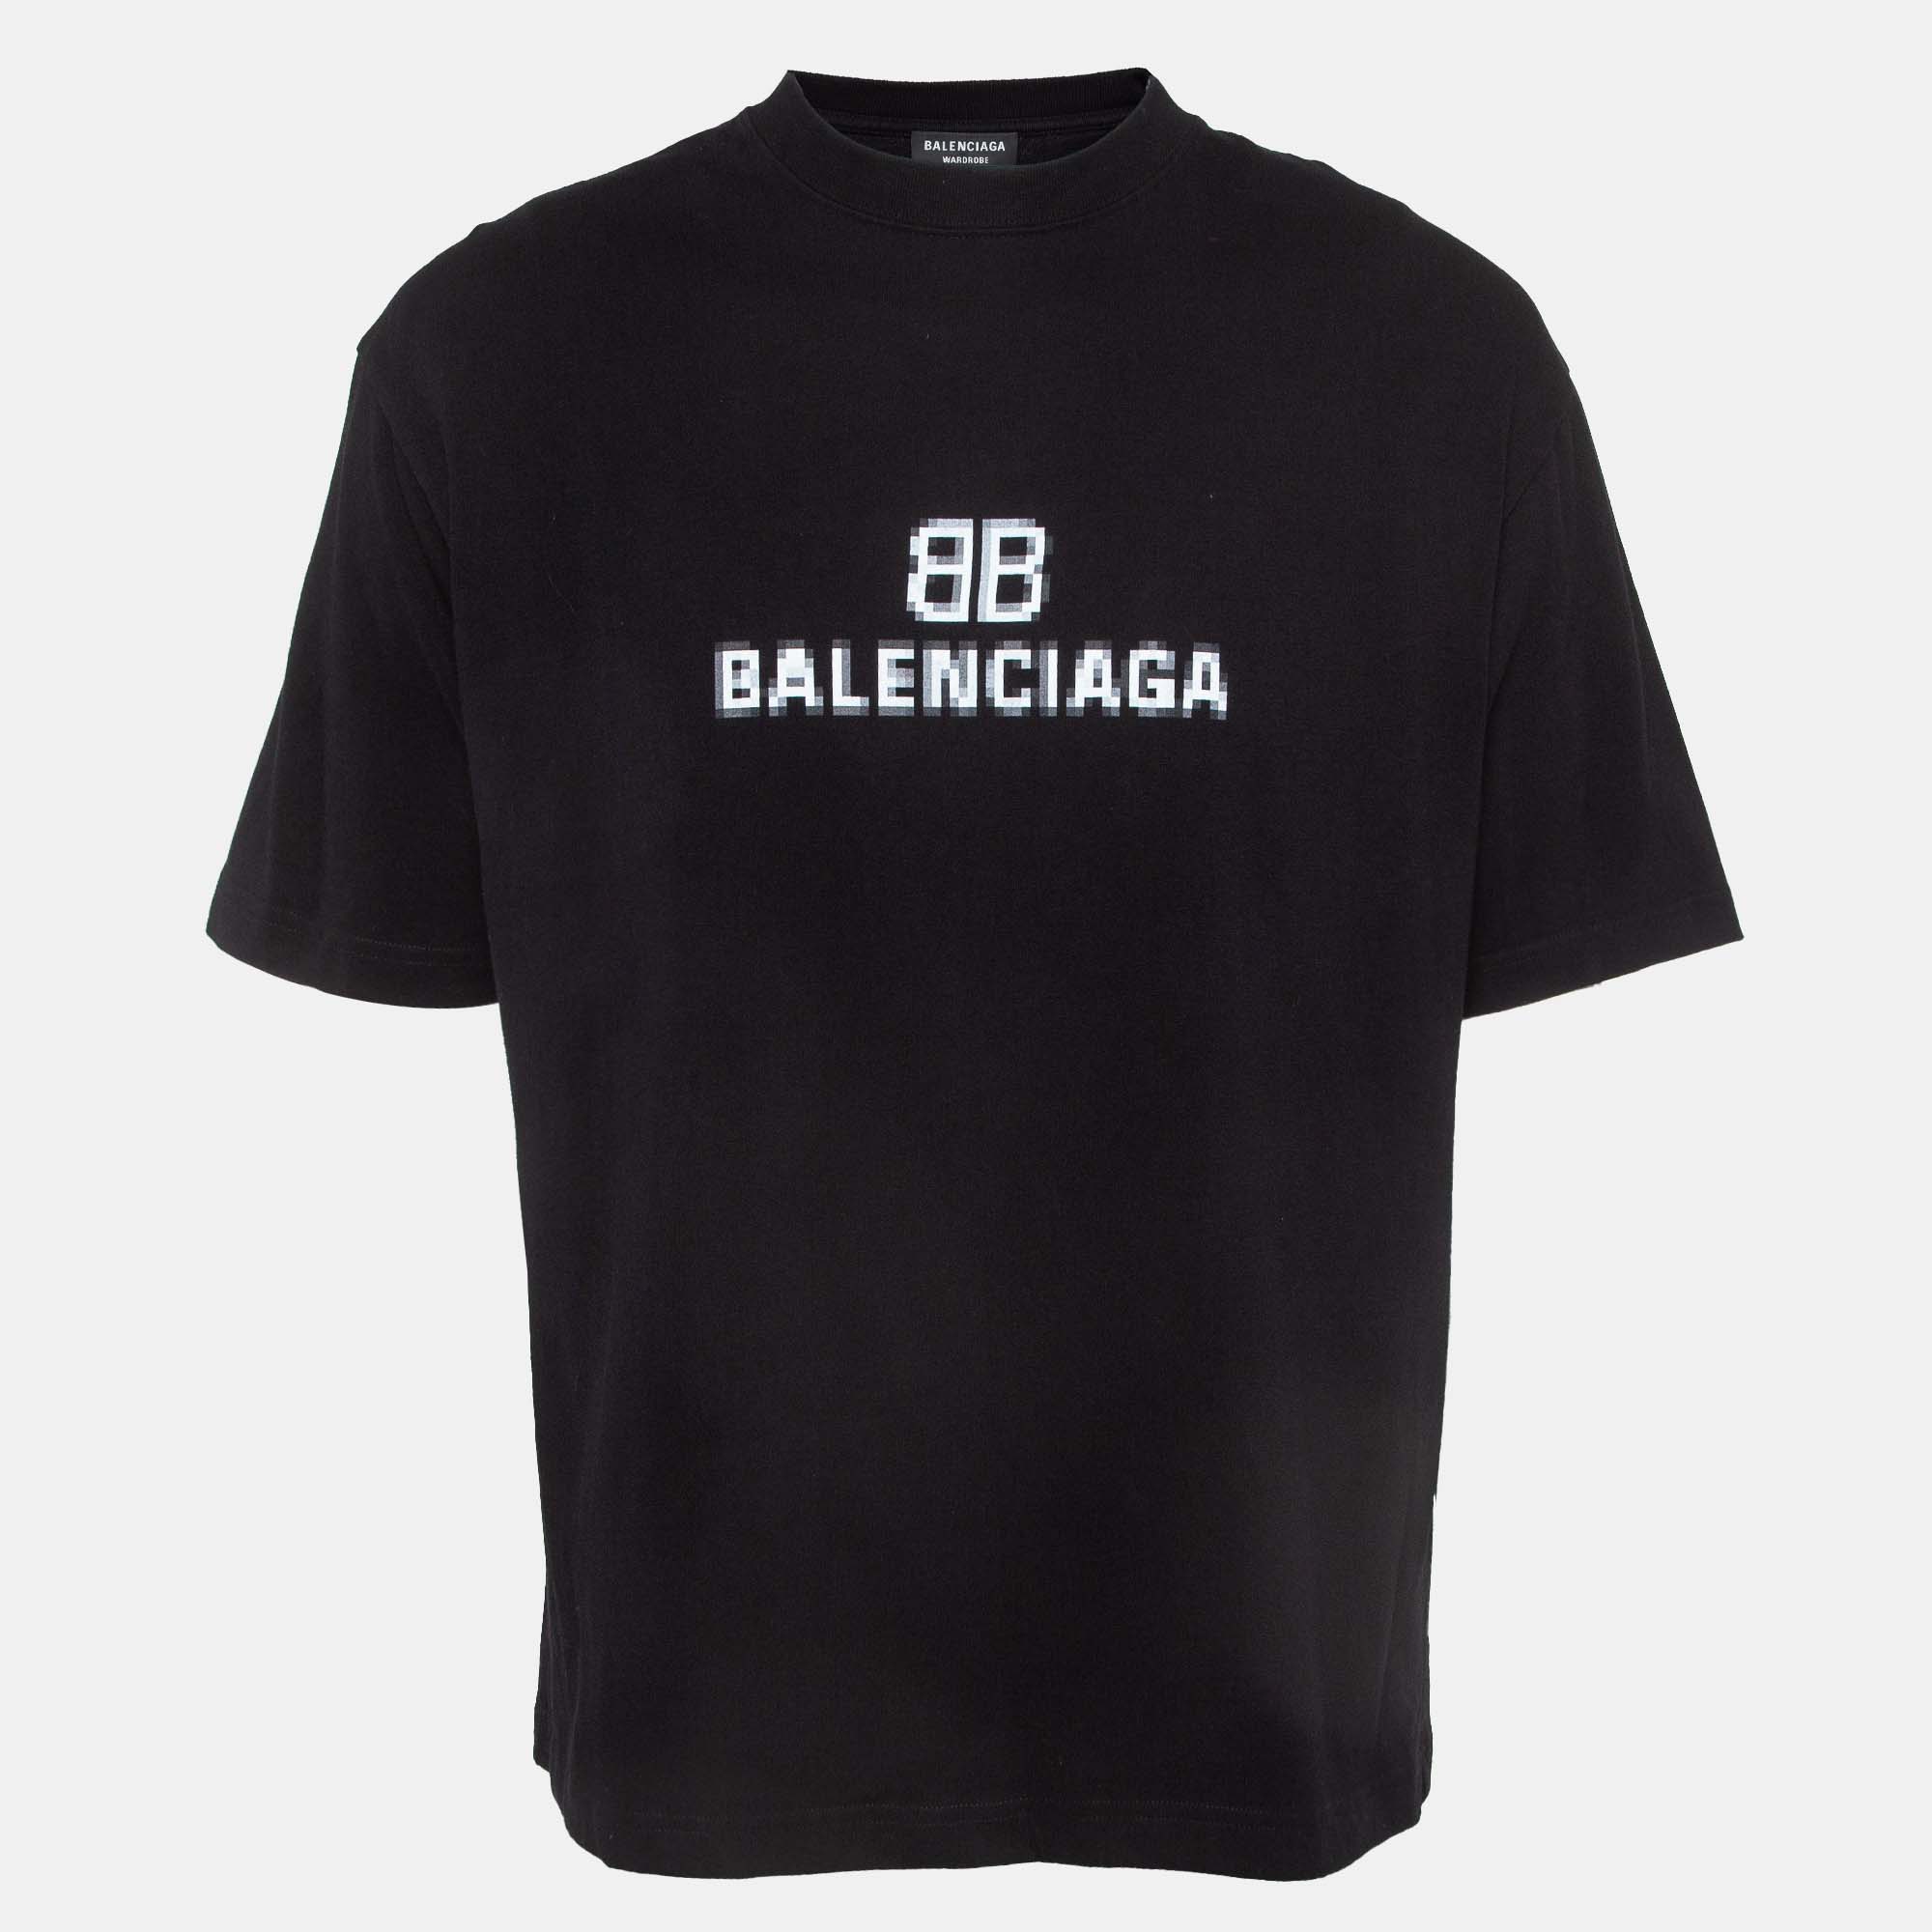 Balenciaga black blurry logo print cotton crew neck t-shirt s